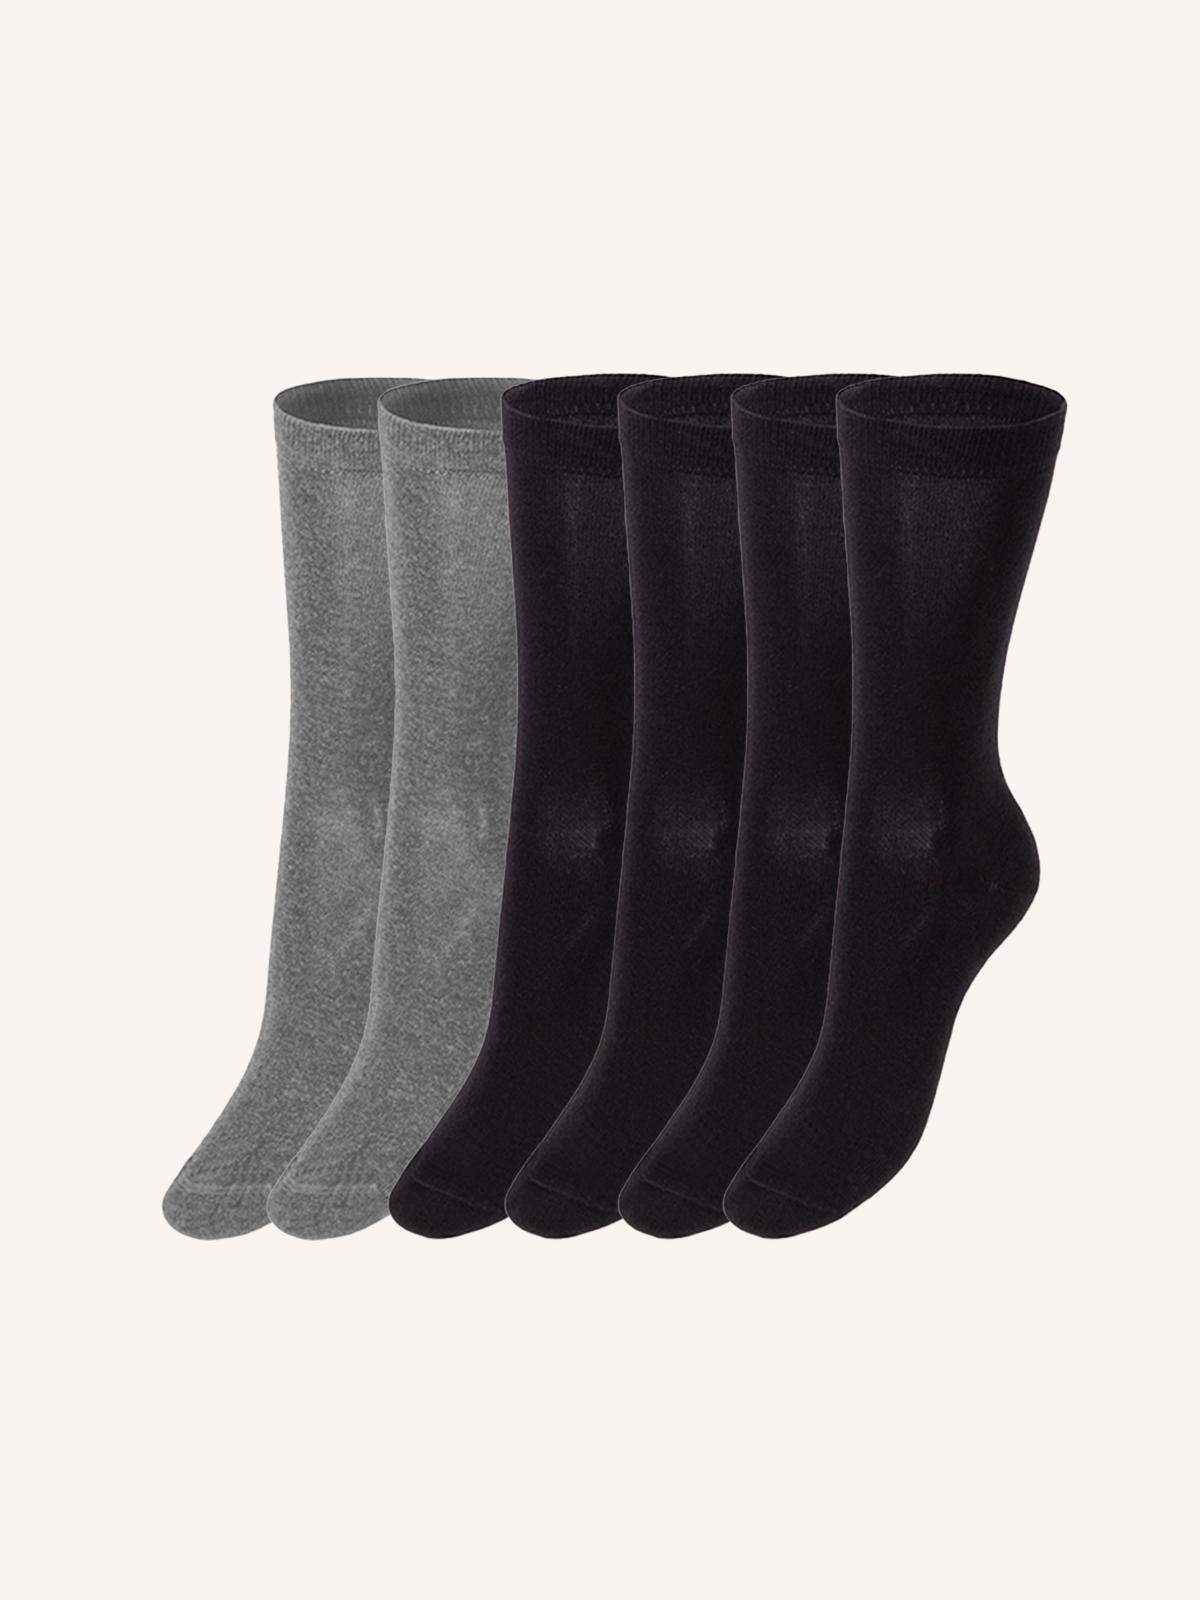 Short Sock in Recycled Fibers for Women | Plain Color | Pack of 3 pairs | Ocean DC